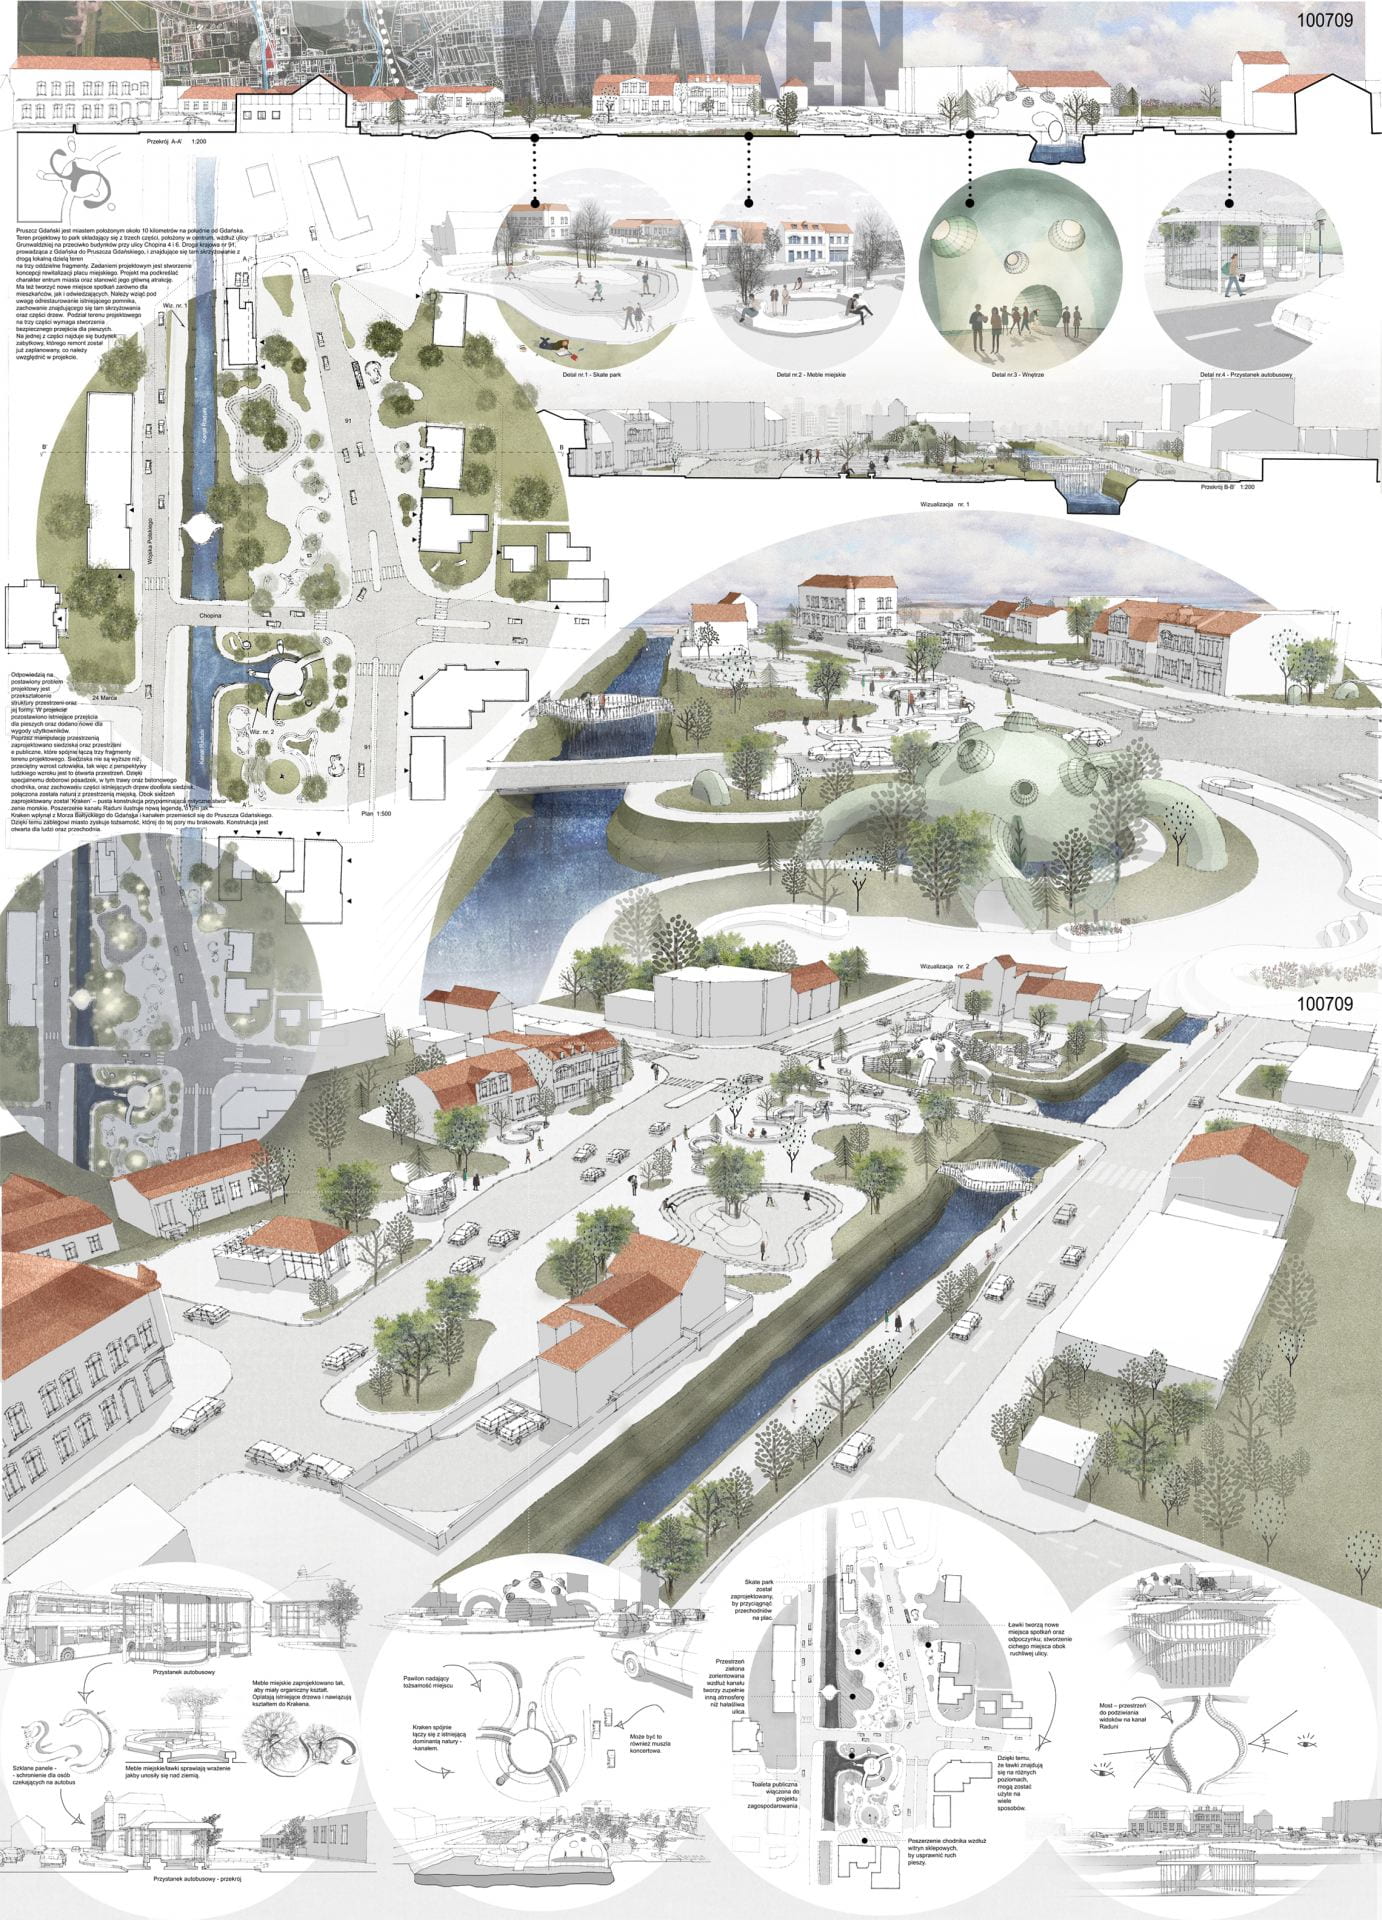 Graphic of award-winning Erasmus design studio redesigning a town square in Poland.